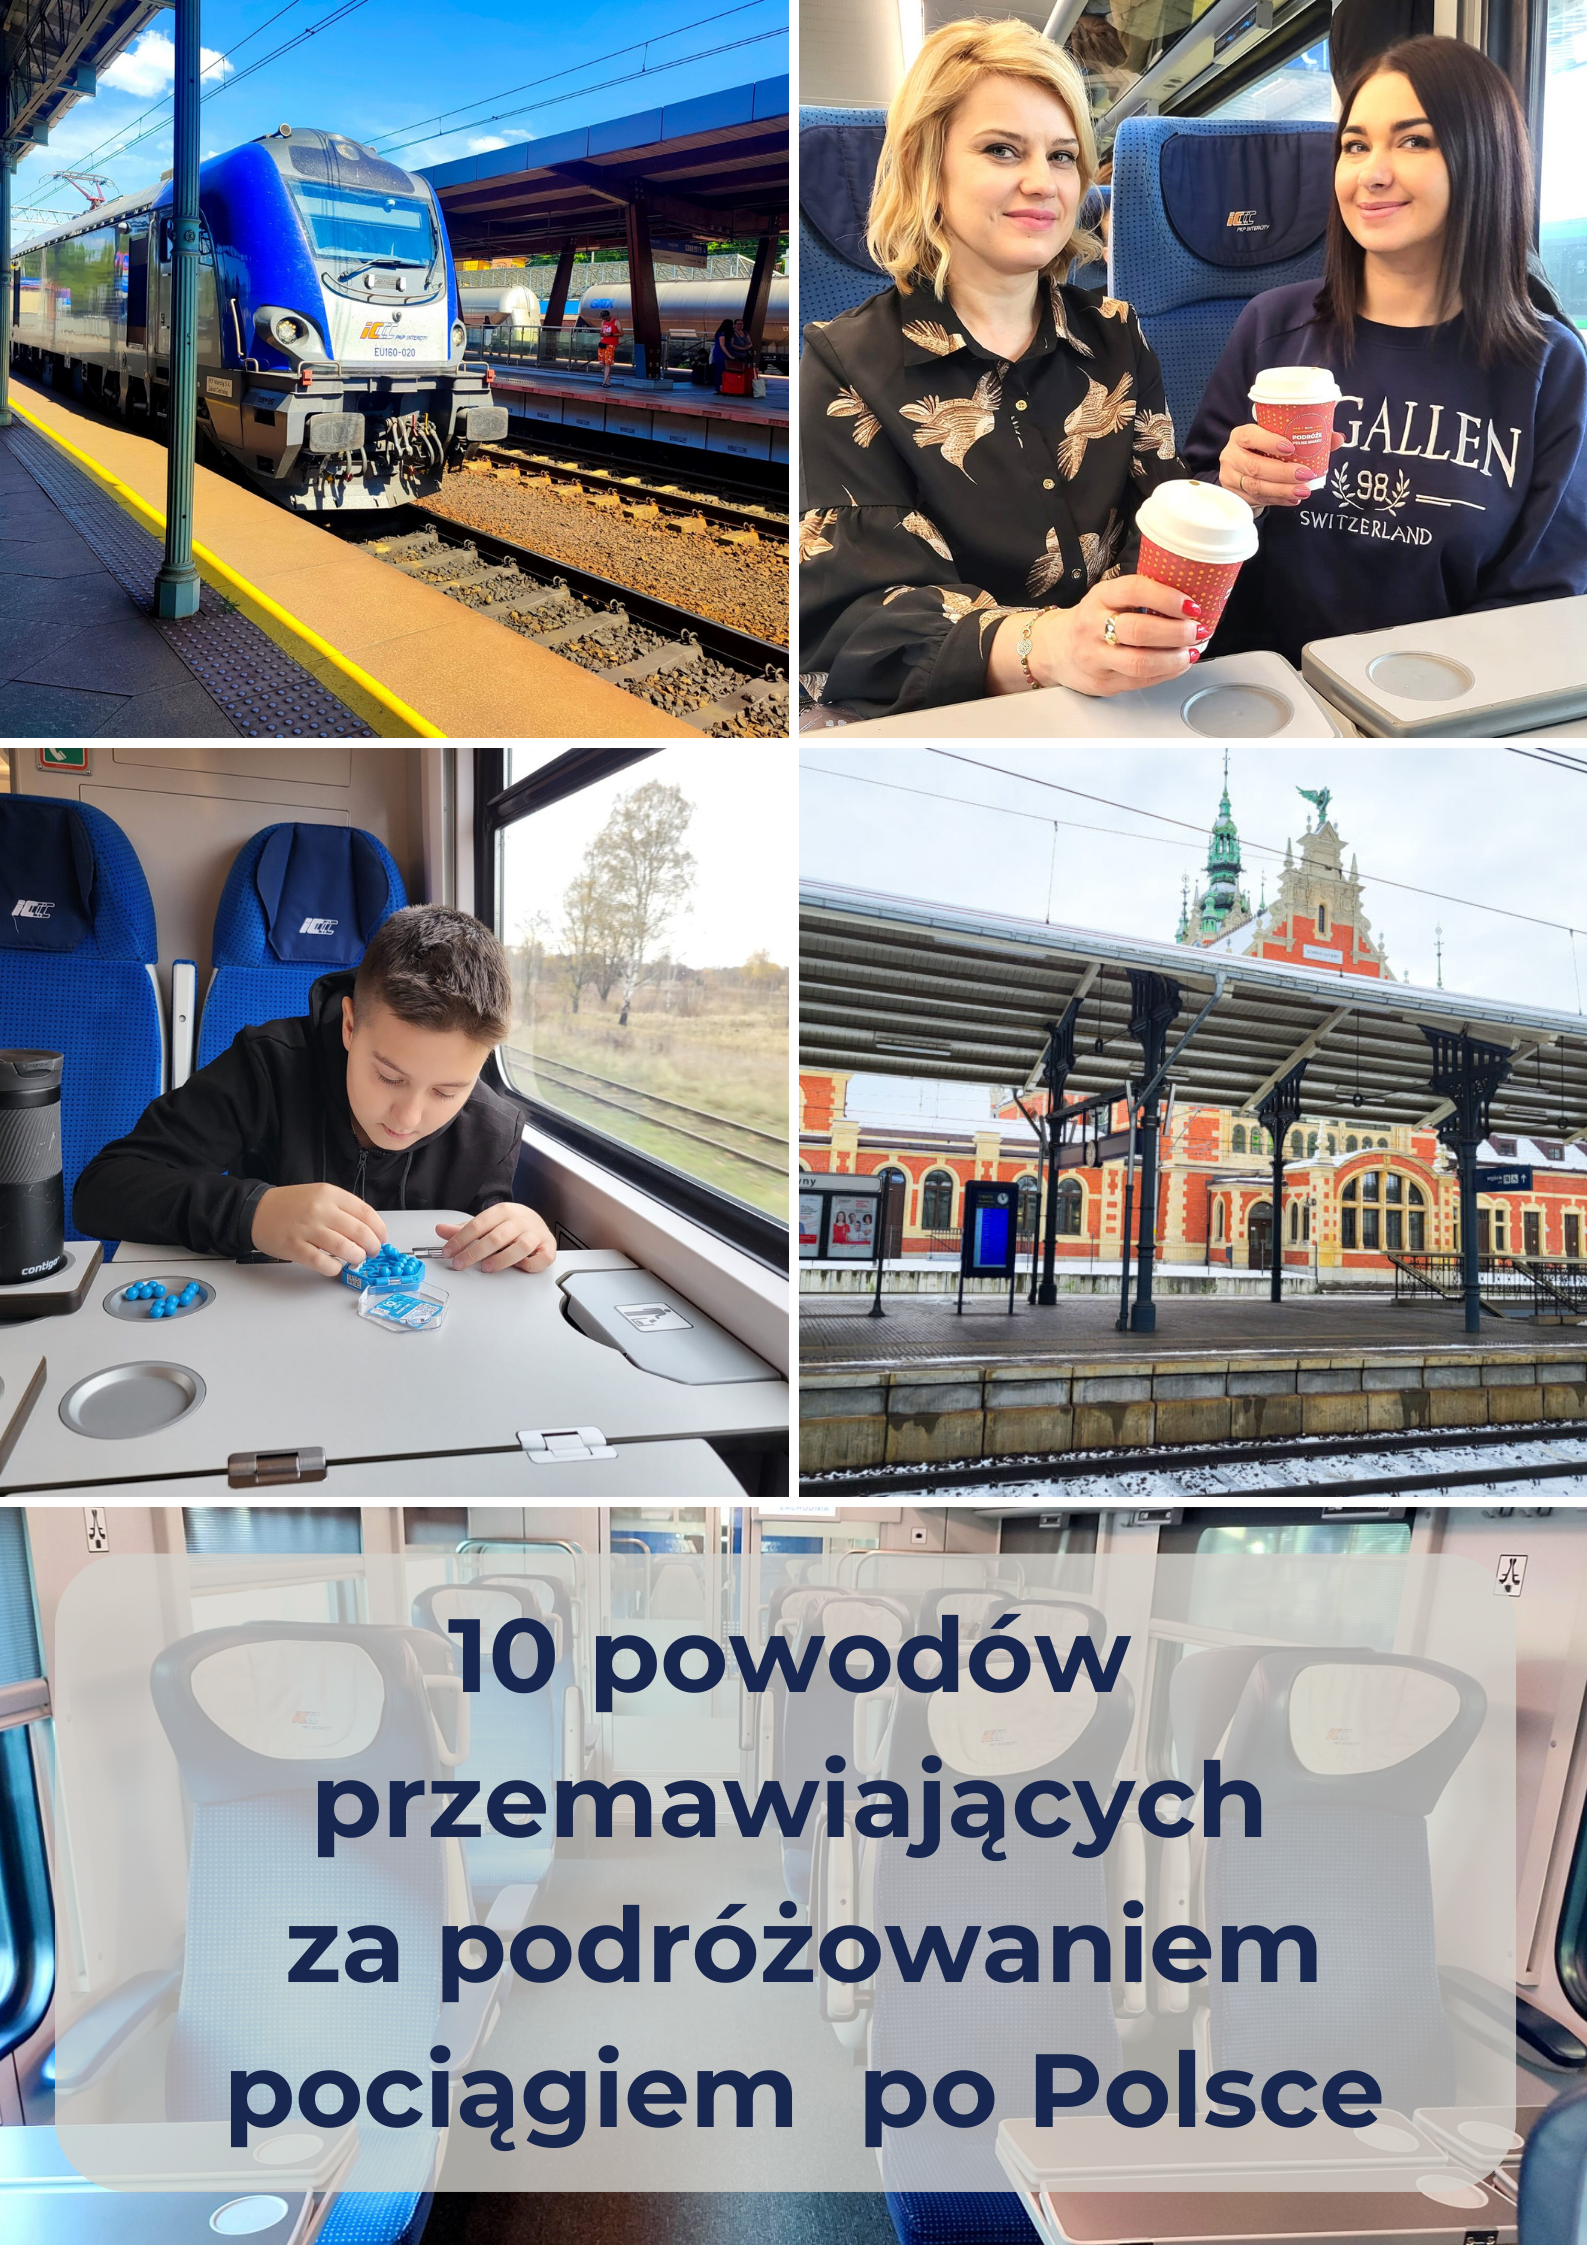 pociągiem po Polsce